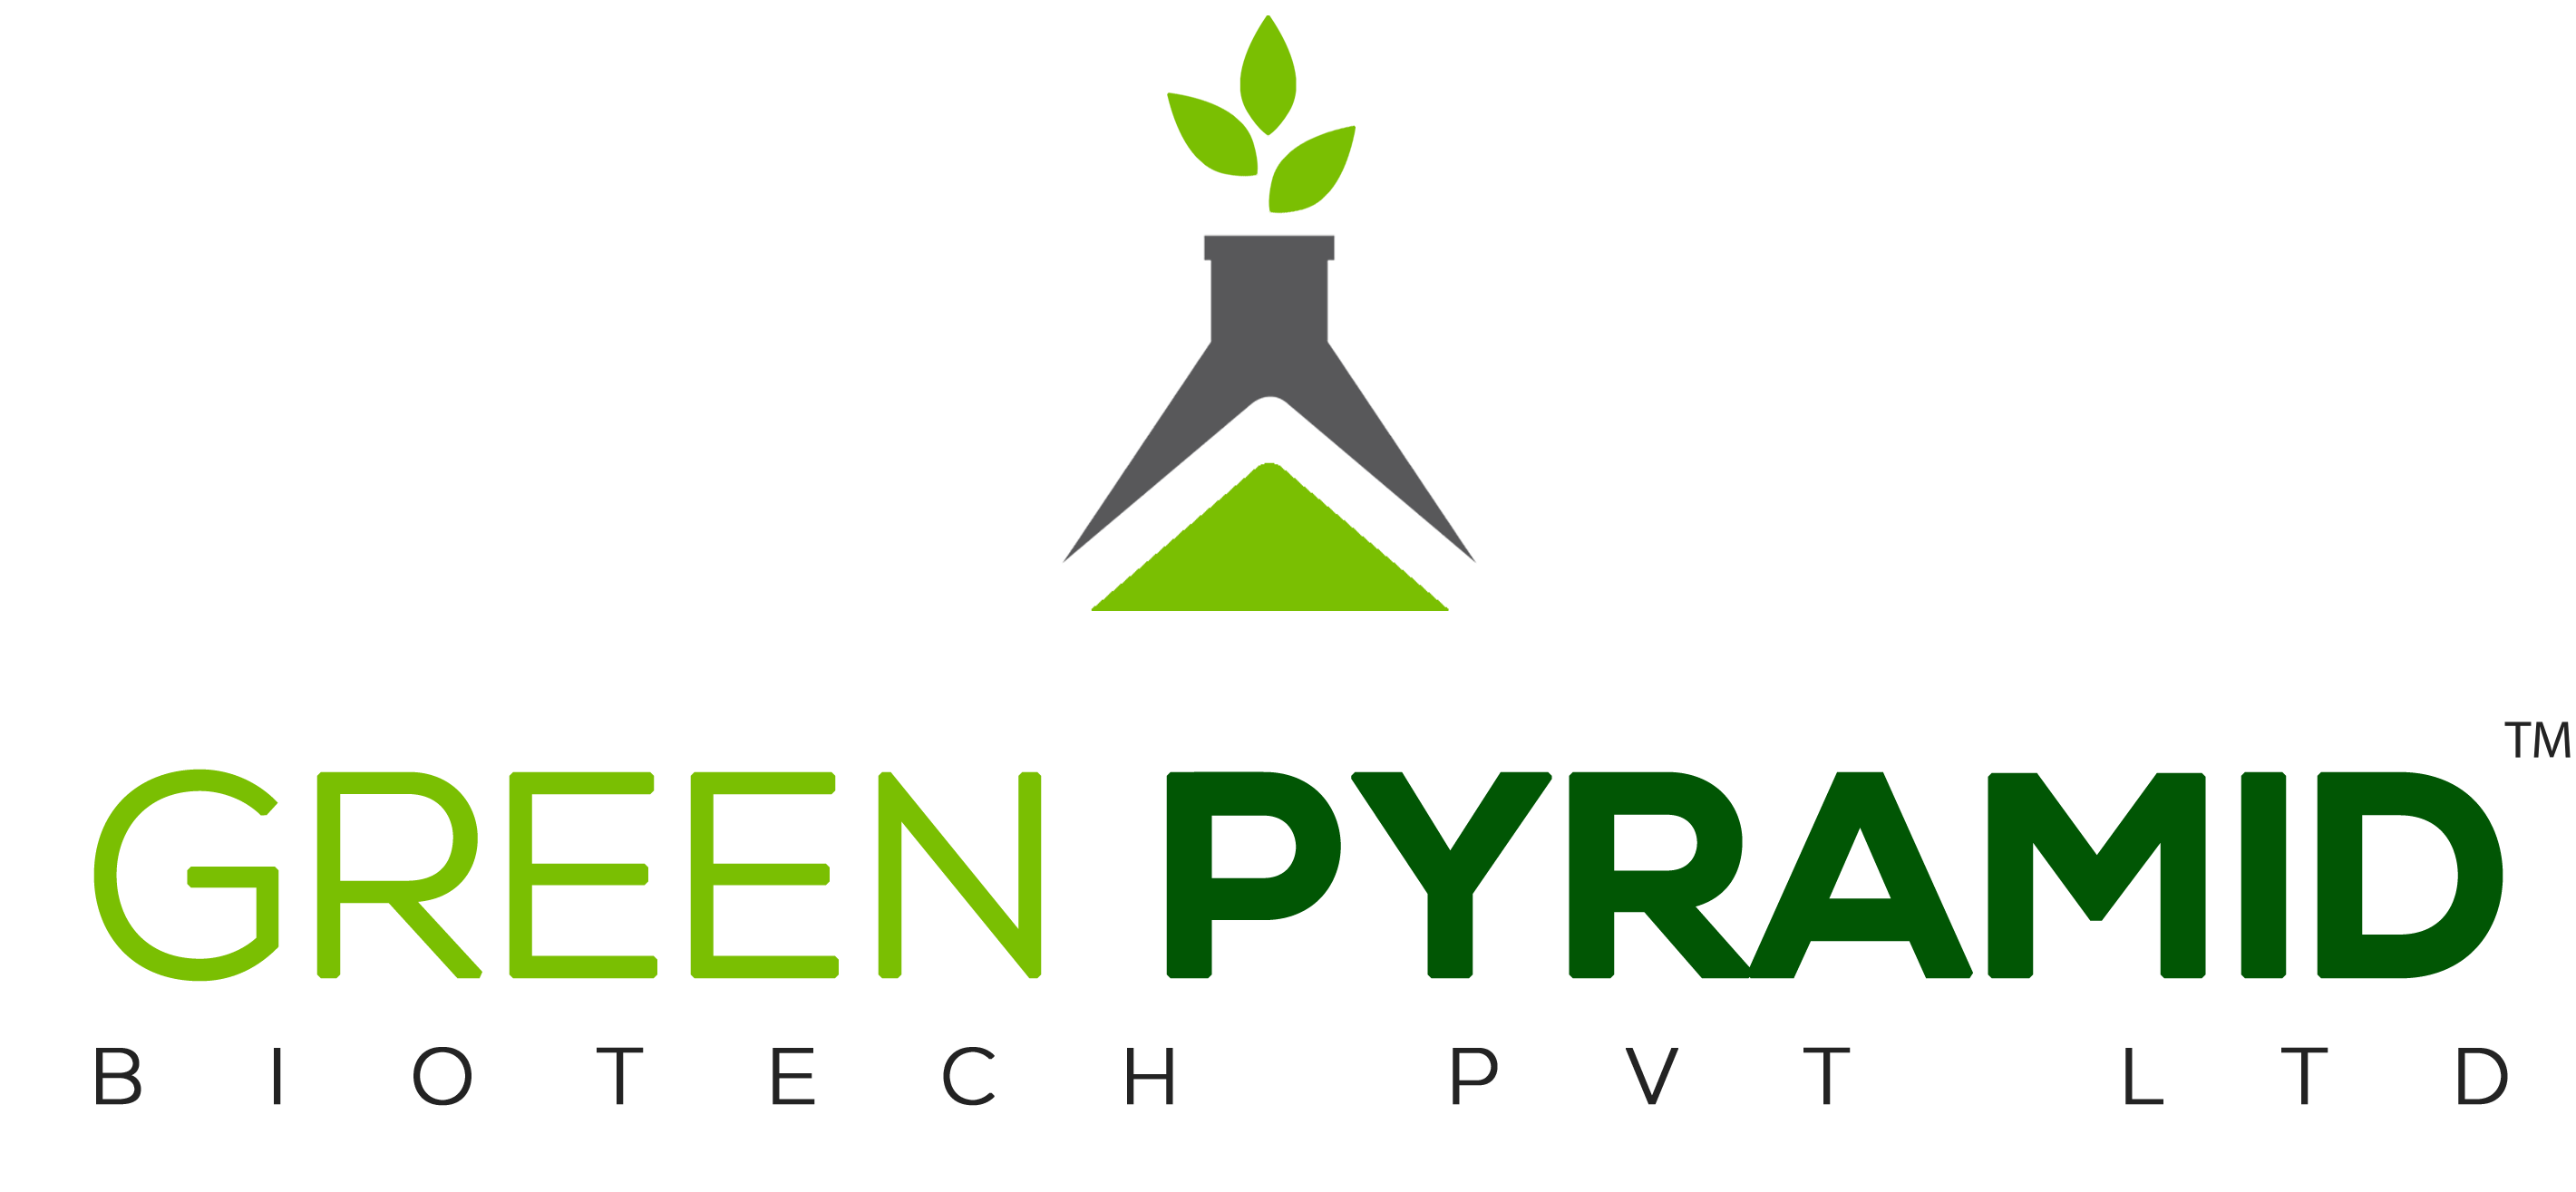 Green Pyramid Logo - Green Pyramid Biotech. Startups Venture Center